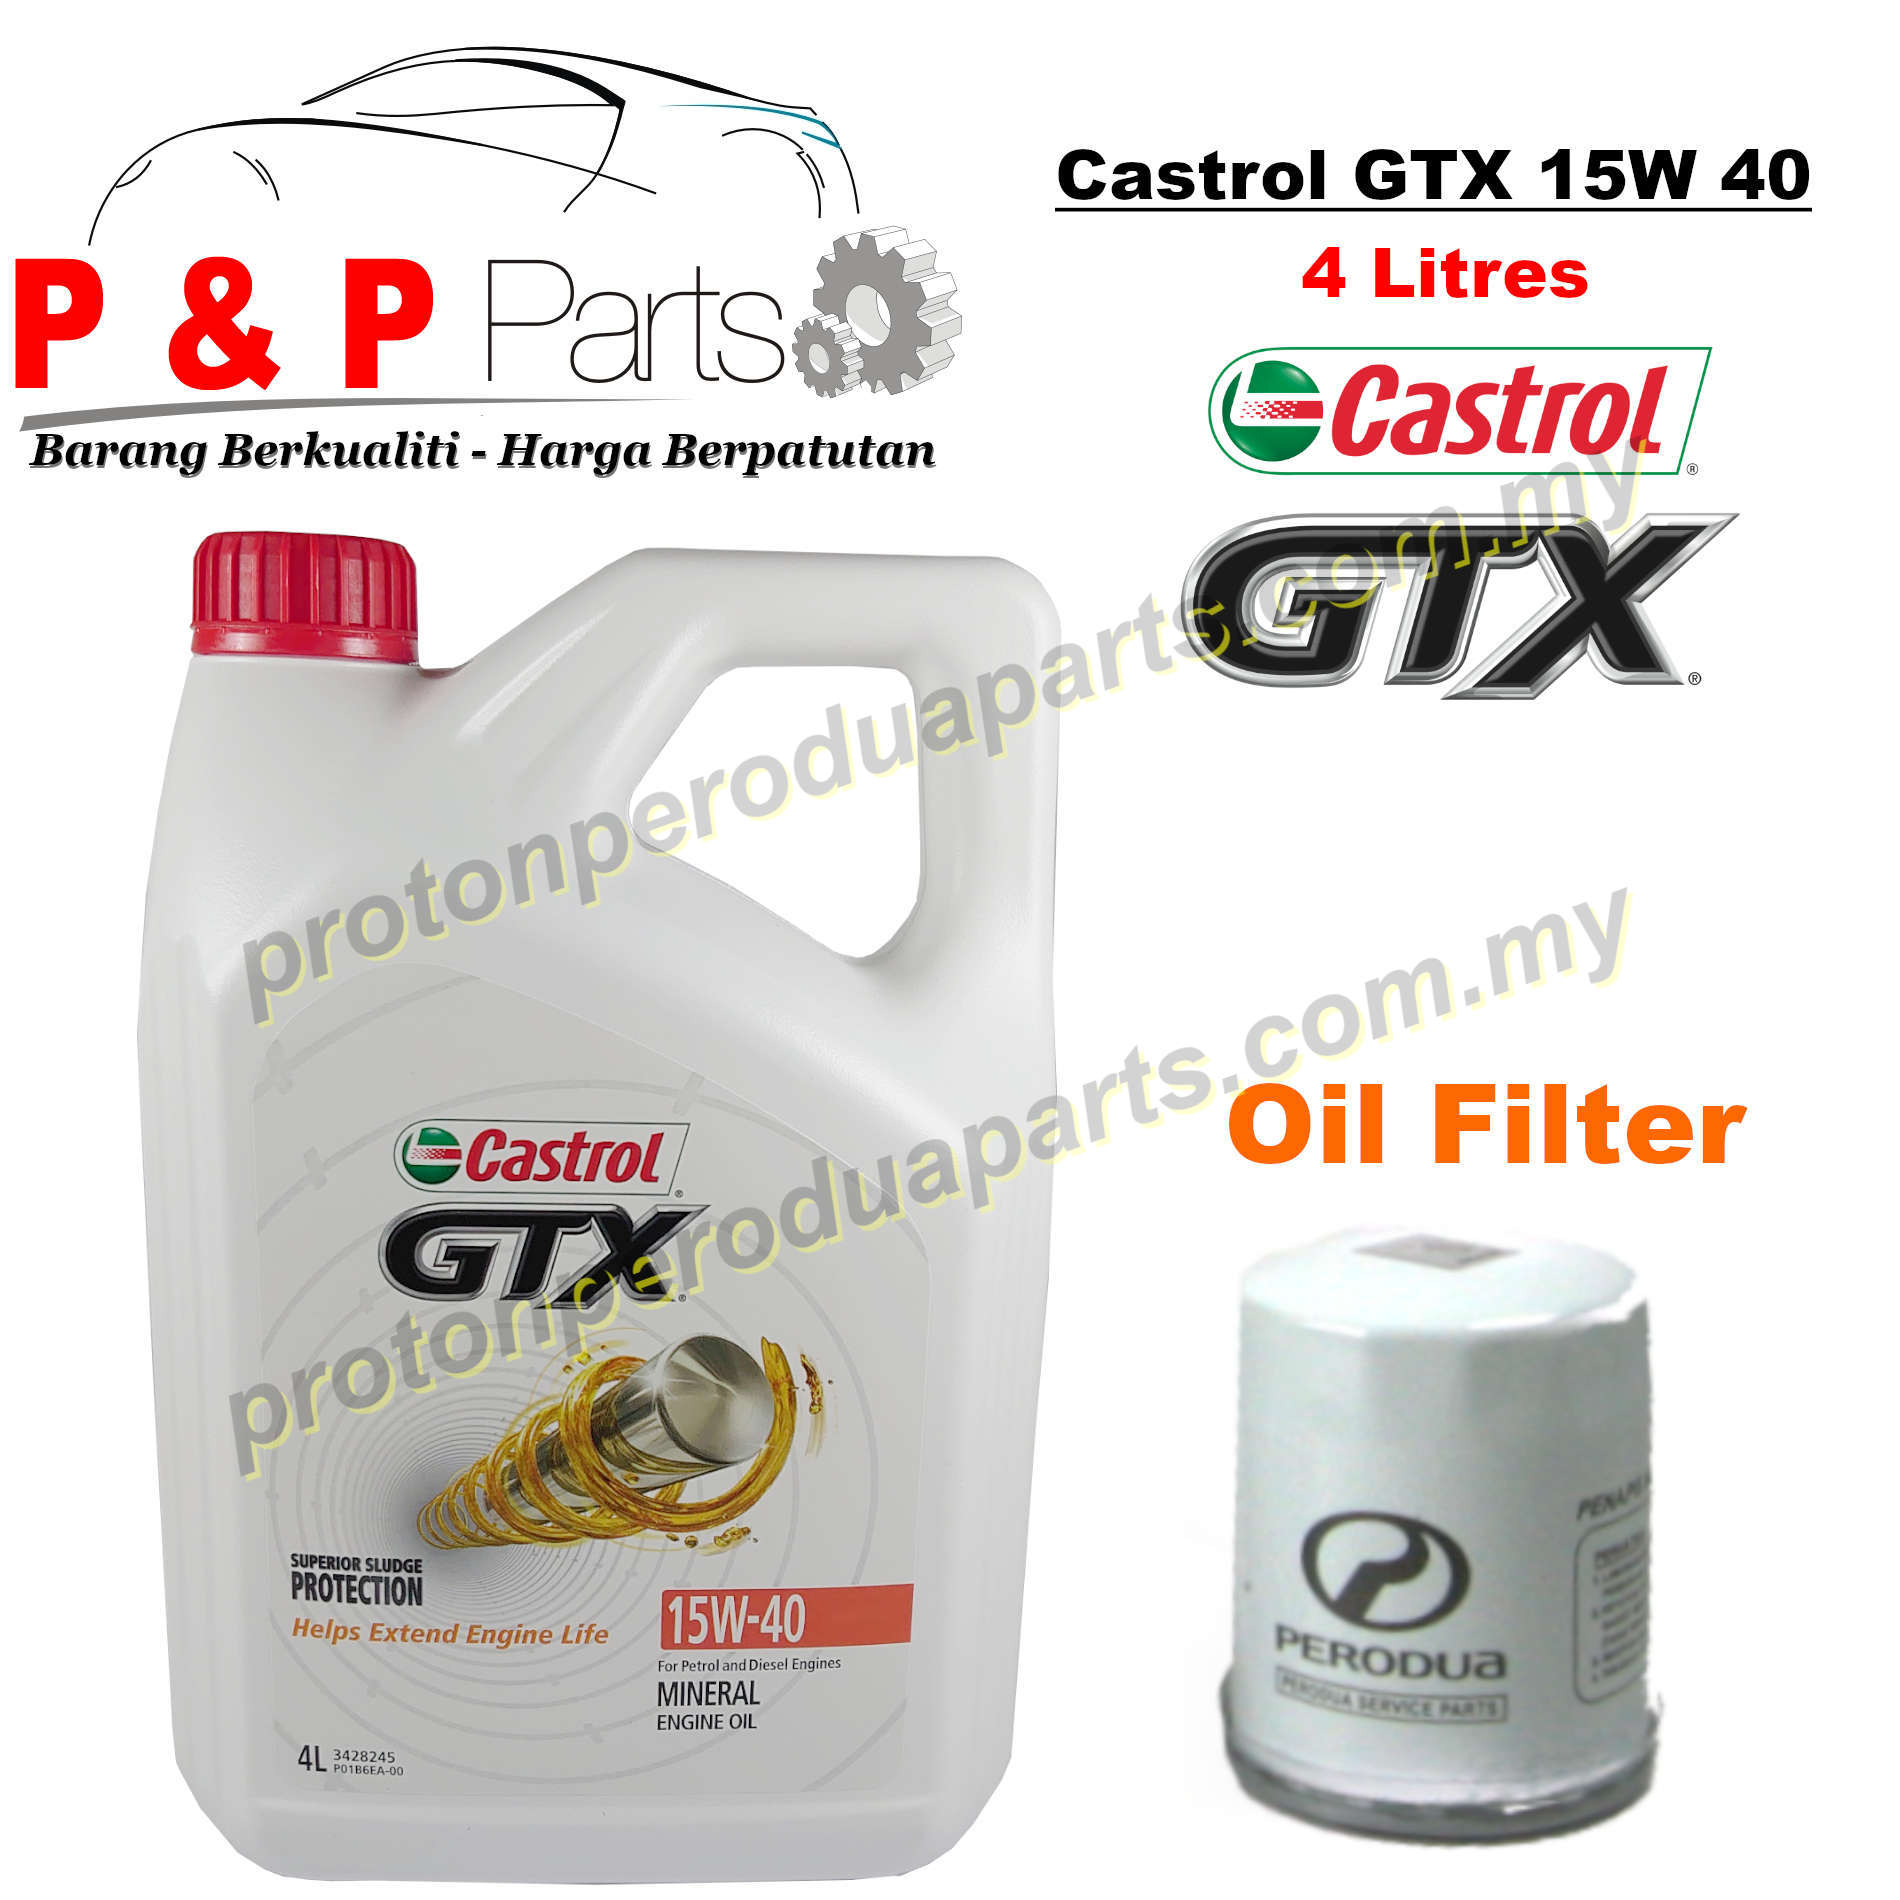 Castrol GTX 15W 40 Engine Oil 4 litres Minyak Enjin 15 40 + Oil Filter for  Perodua / Proton Cars - Minyak Hitam - Proton Perodua Parts